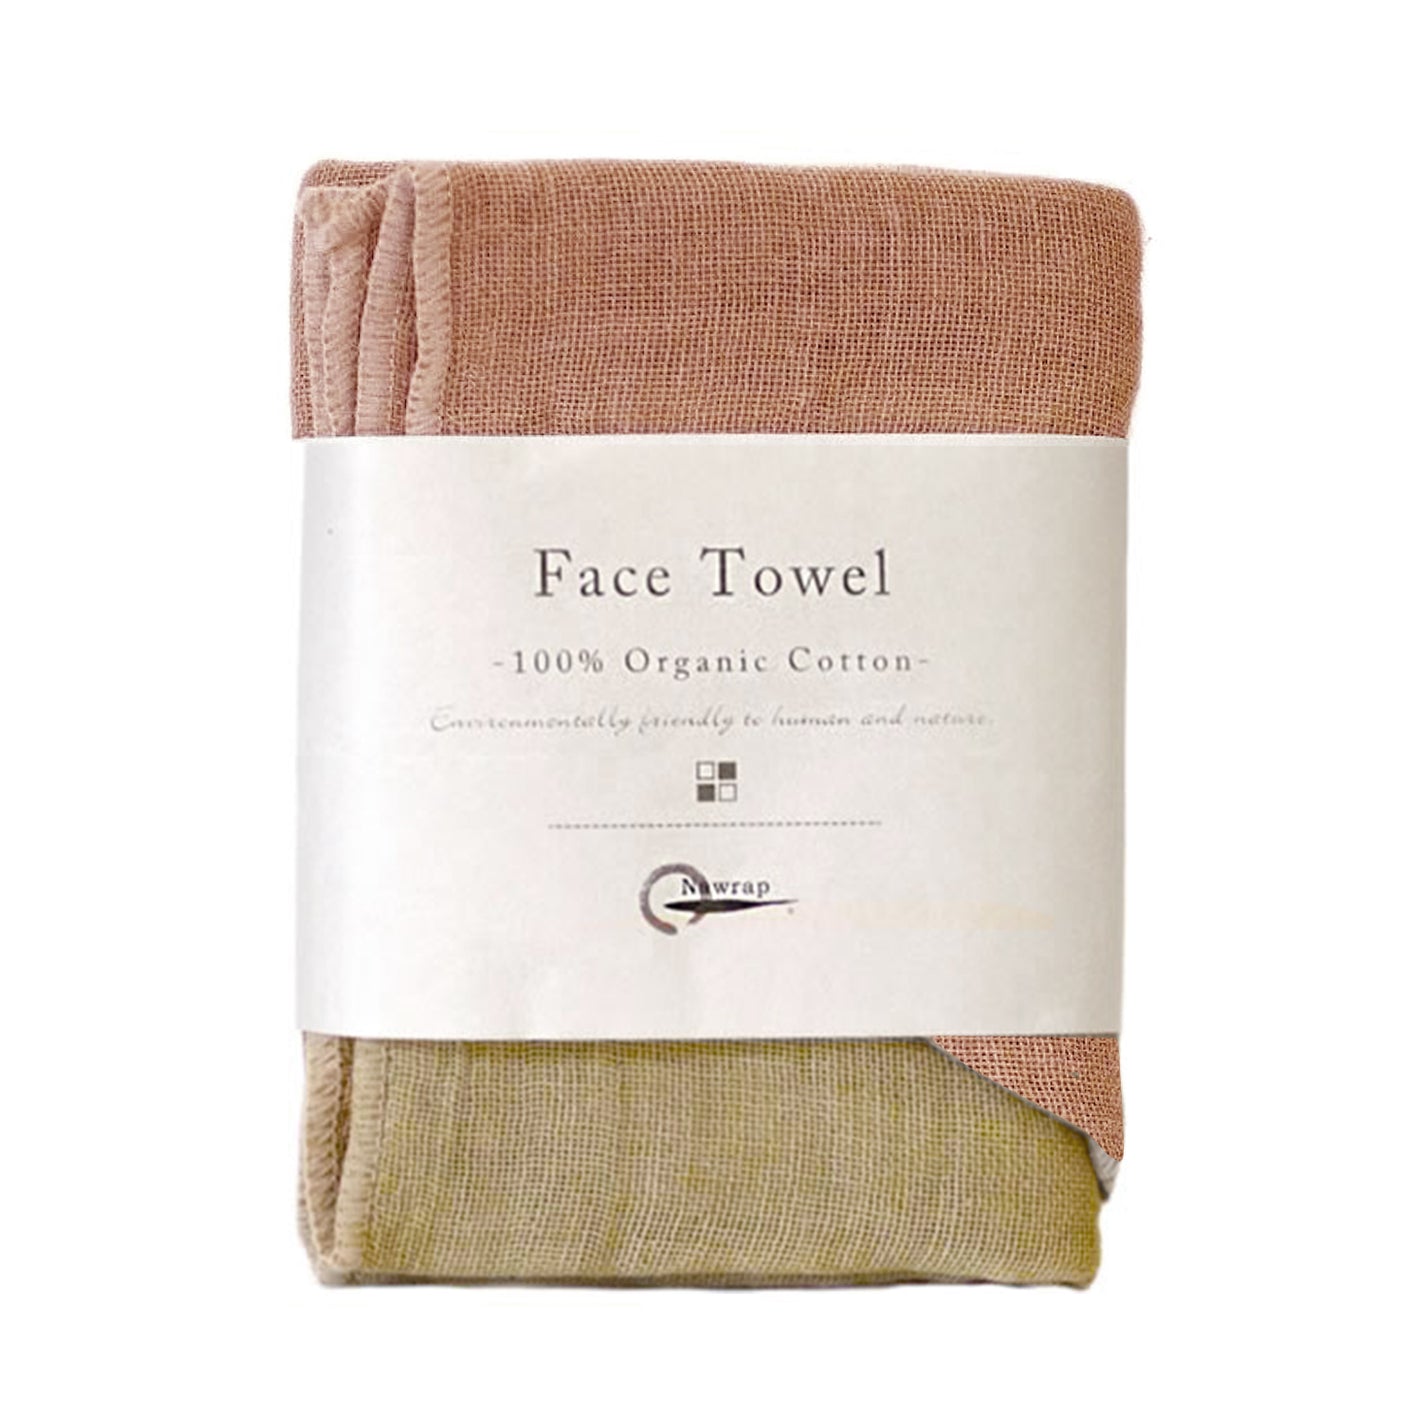 Nawrap Organic Cotton Face Towel - Brown + Green